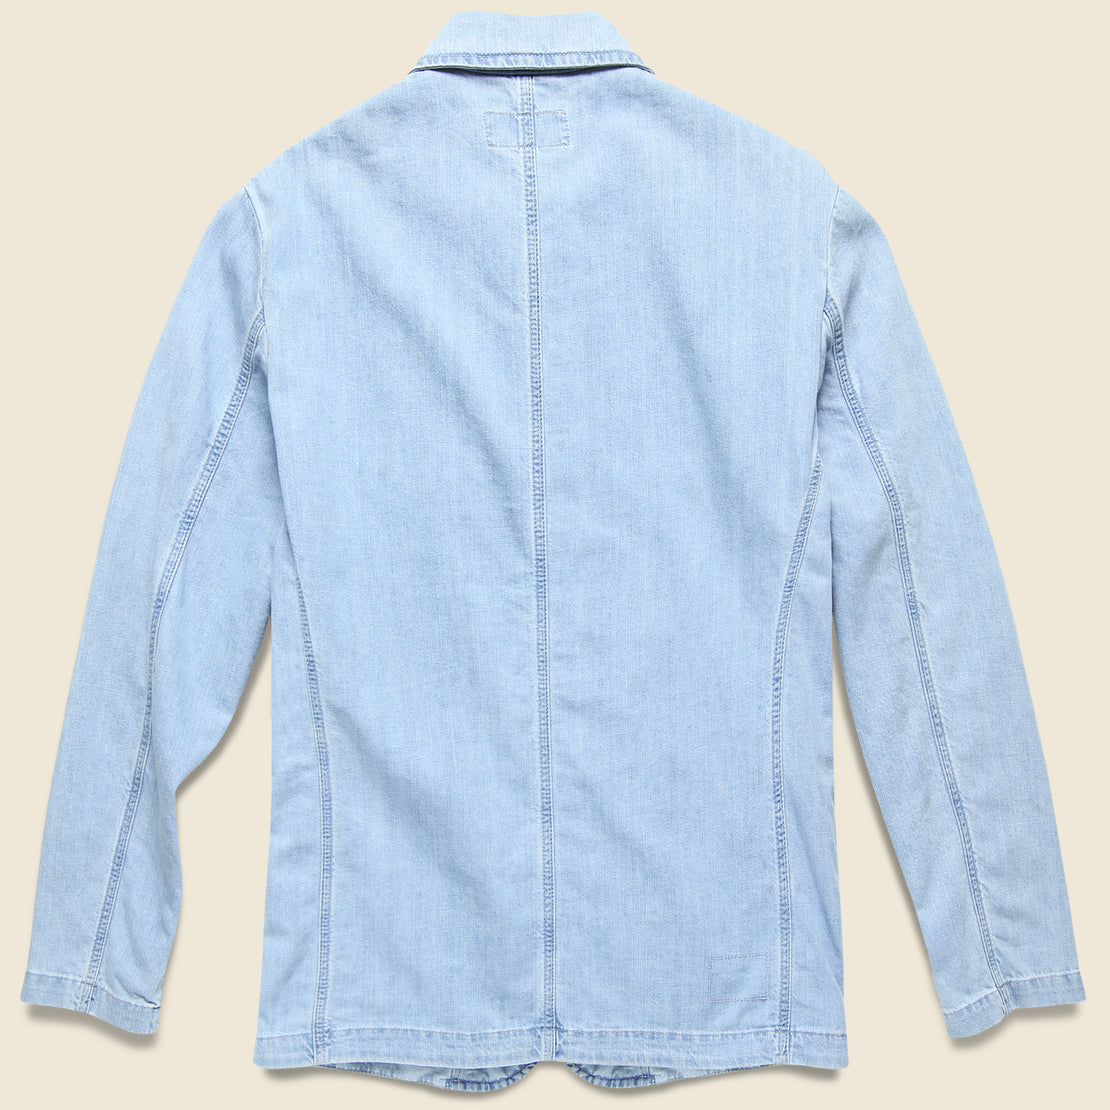 Bakers Jacket - Indigo Summer Denim - Universal Works - STAG Provisions - Outerwear - Coat / Jacket